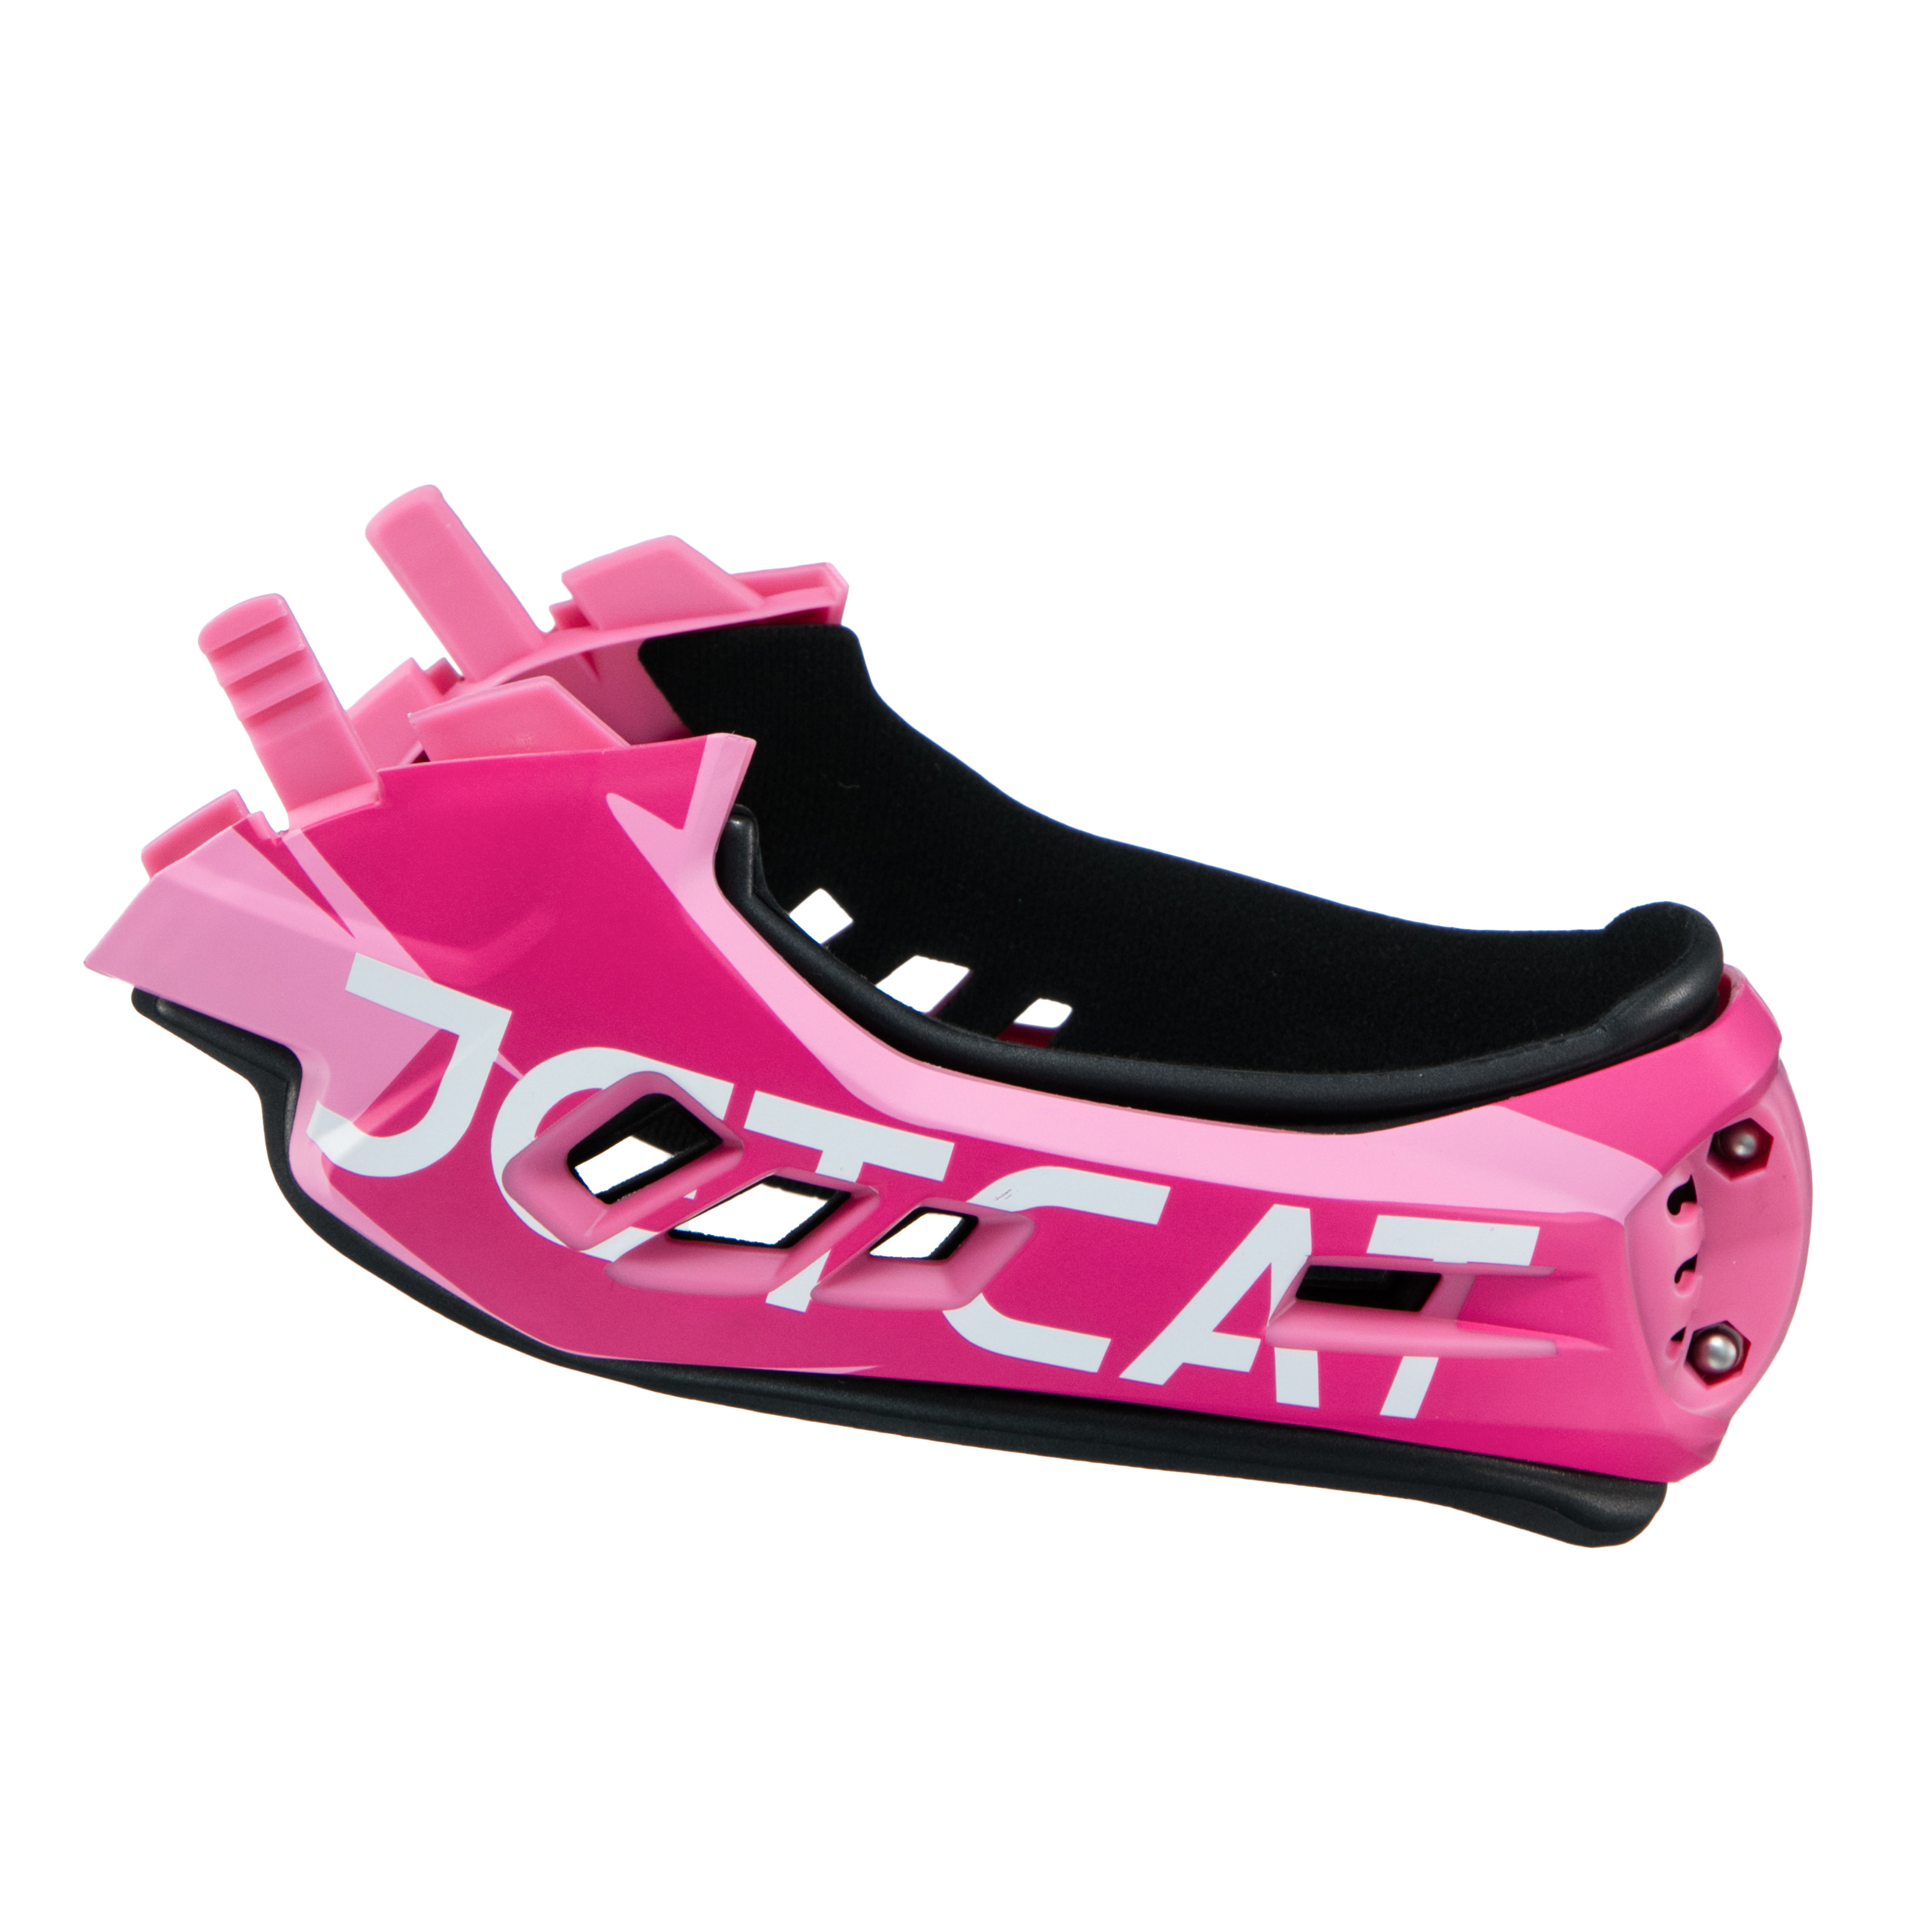 Чингарда с вкладкой для шлема JetCat Race, розовый обмотка руля велосипедная bbb race ribbon розовый bht 01